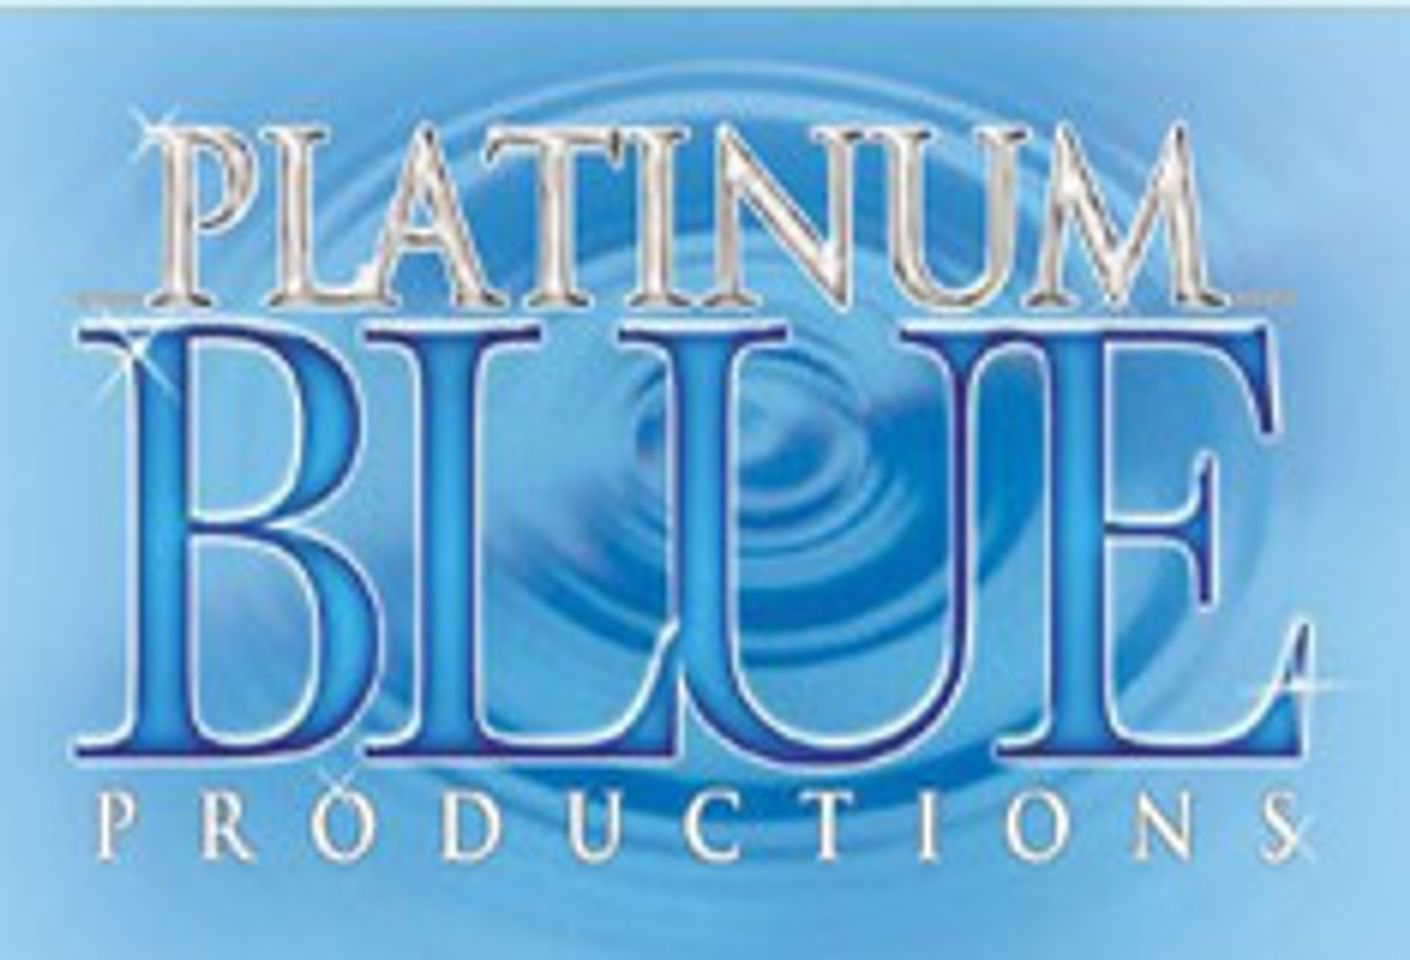 Platinum Blue Not Selling Jill Kelly Productions Catalog